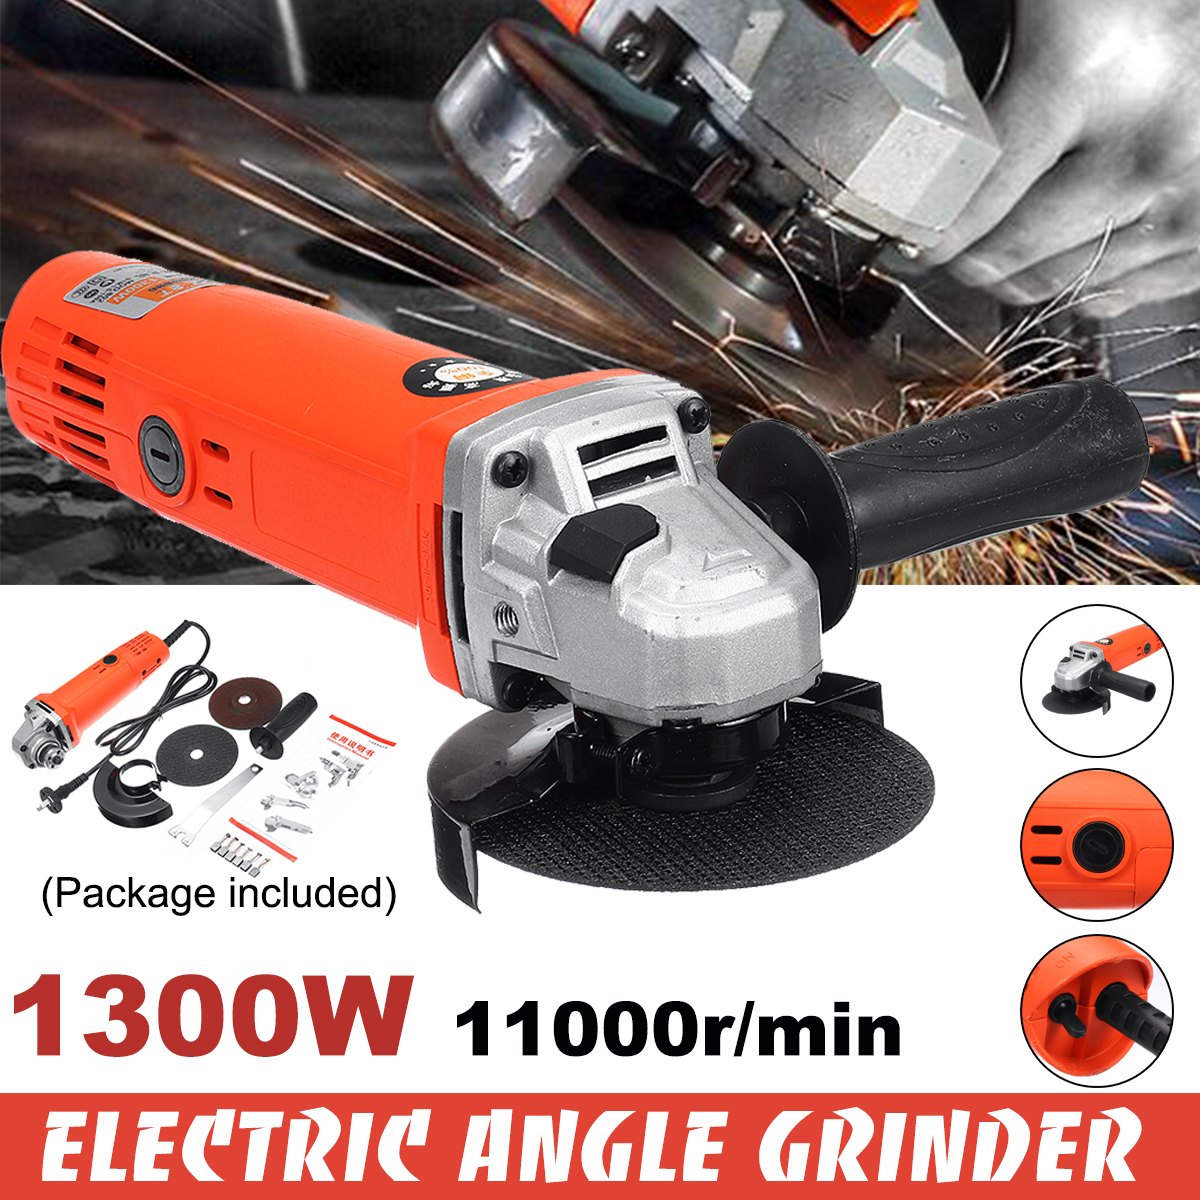 1300W-Electric-Angle-Grinder-11000rmin-Grinding-Polishing-Machine-Set-1612291-2